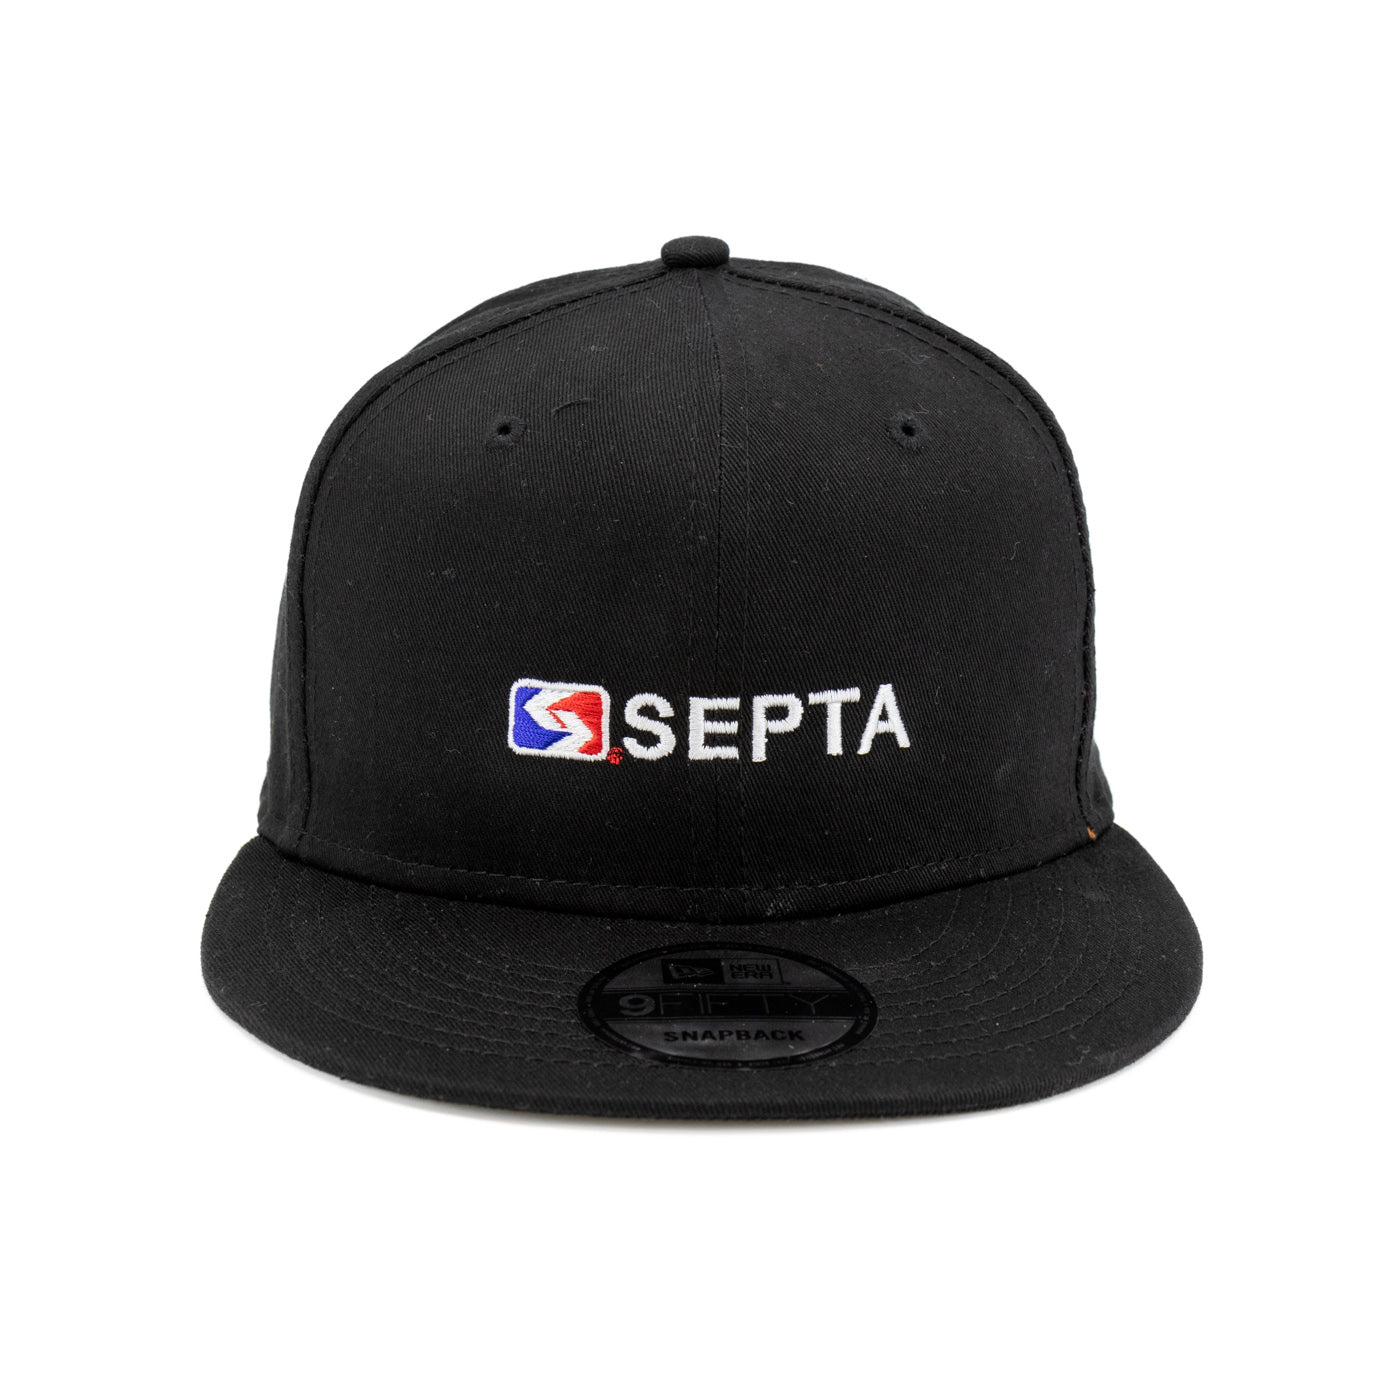 SEPTA Snapback - Black